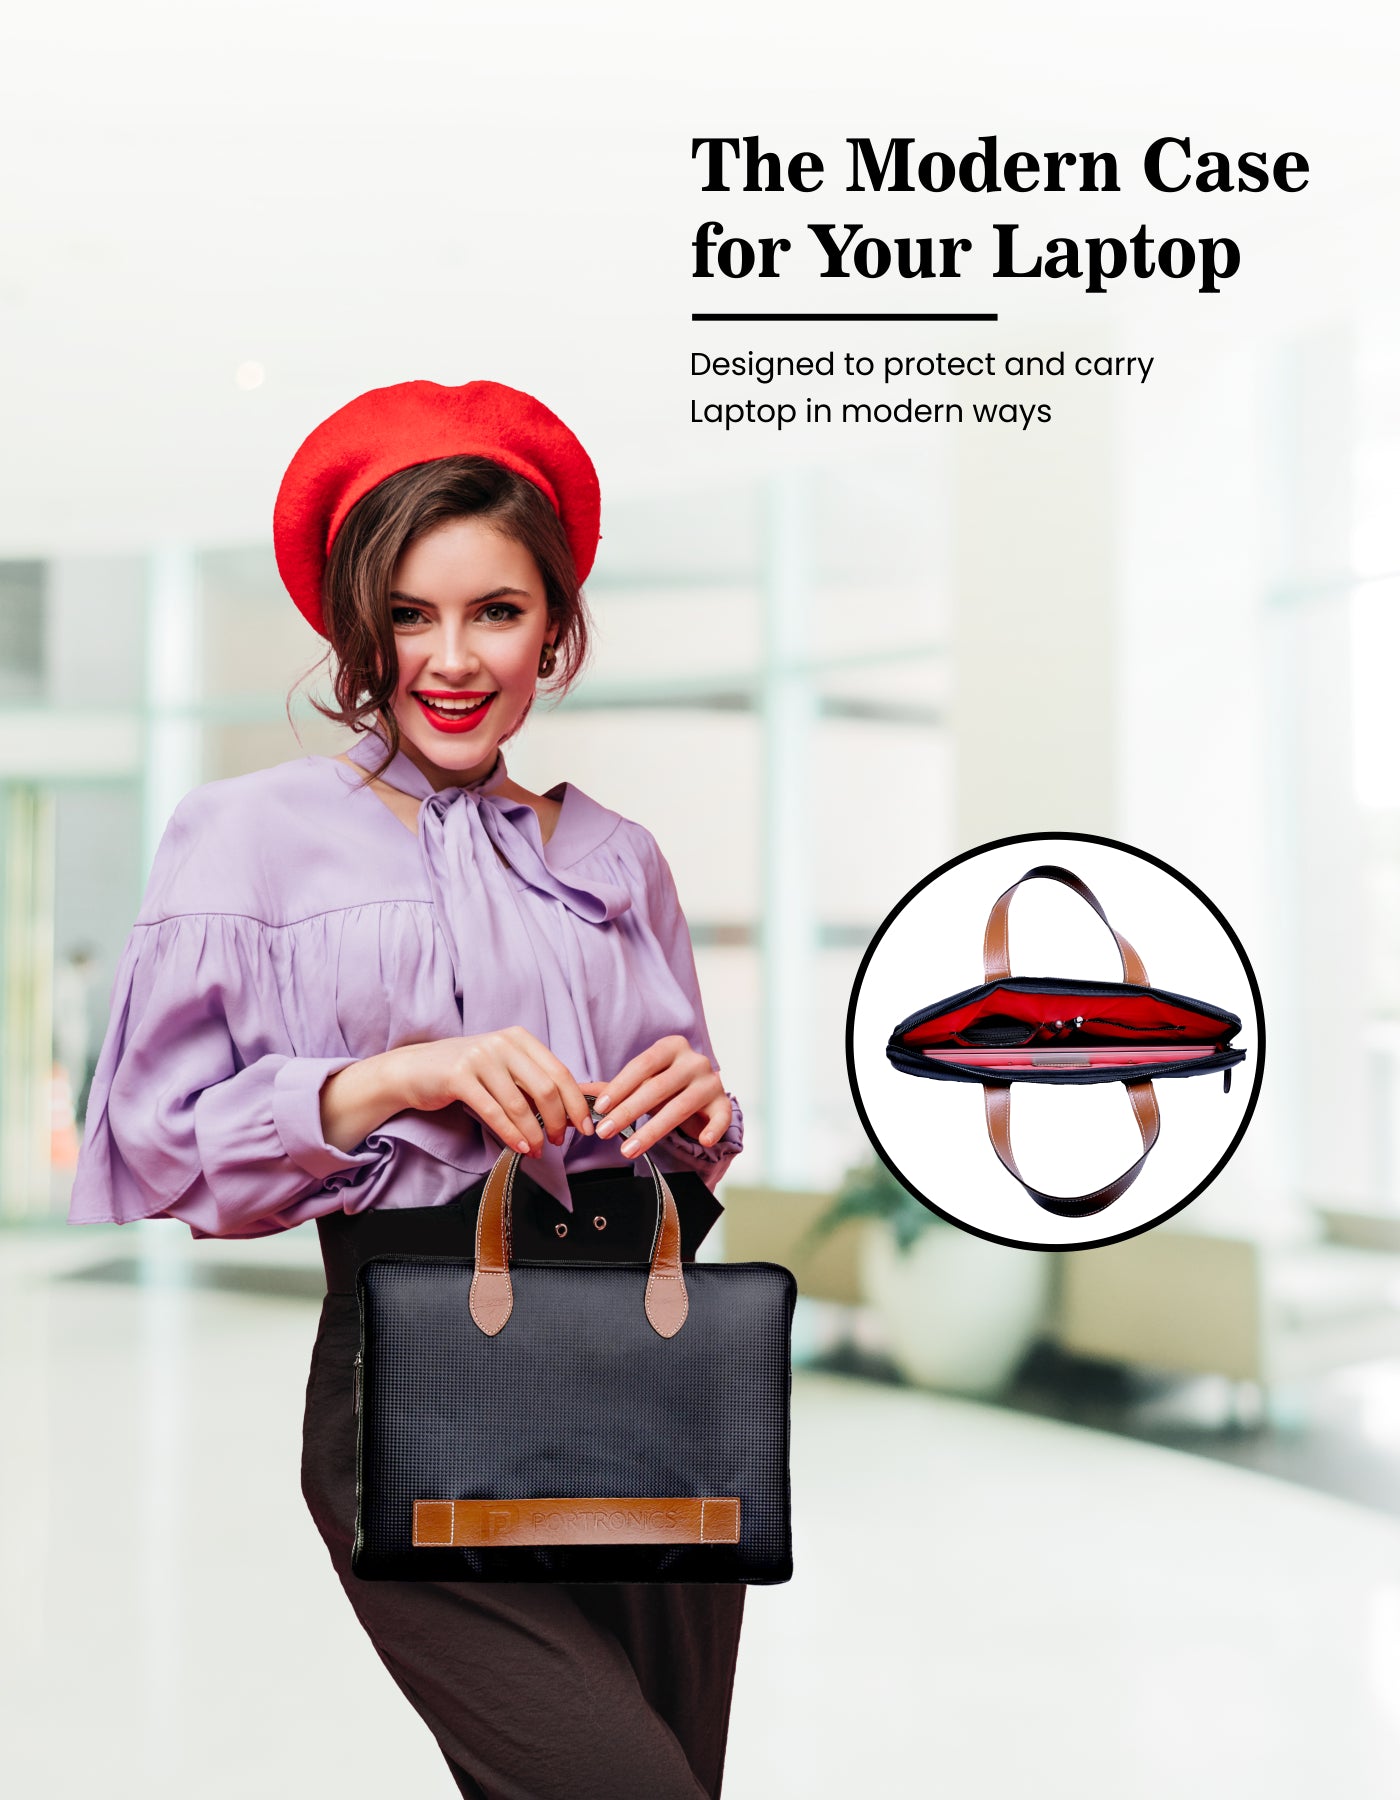 Portronics Encase 101 Laptop Bag & sleeve the modern laptop case